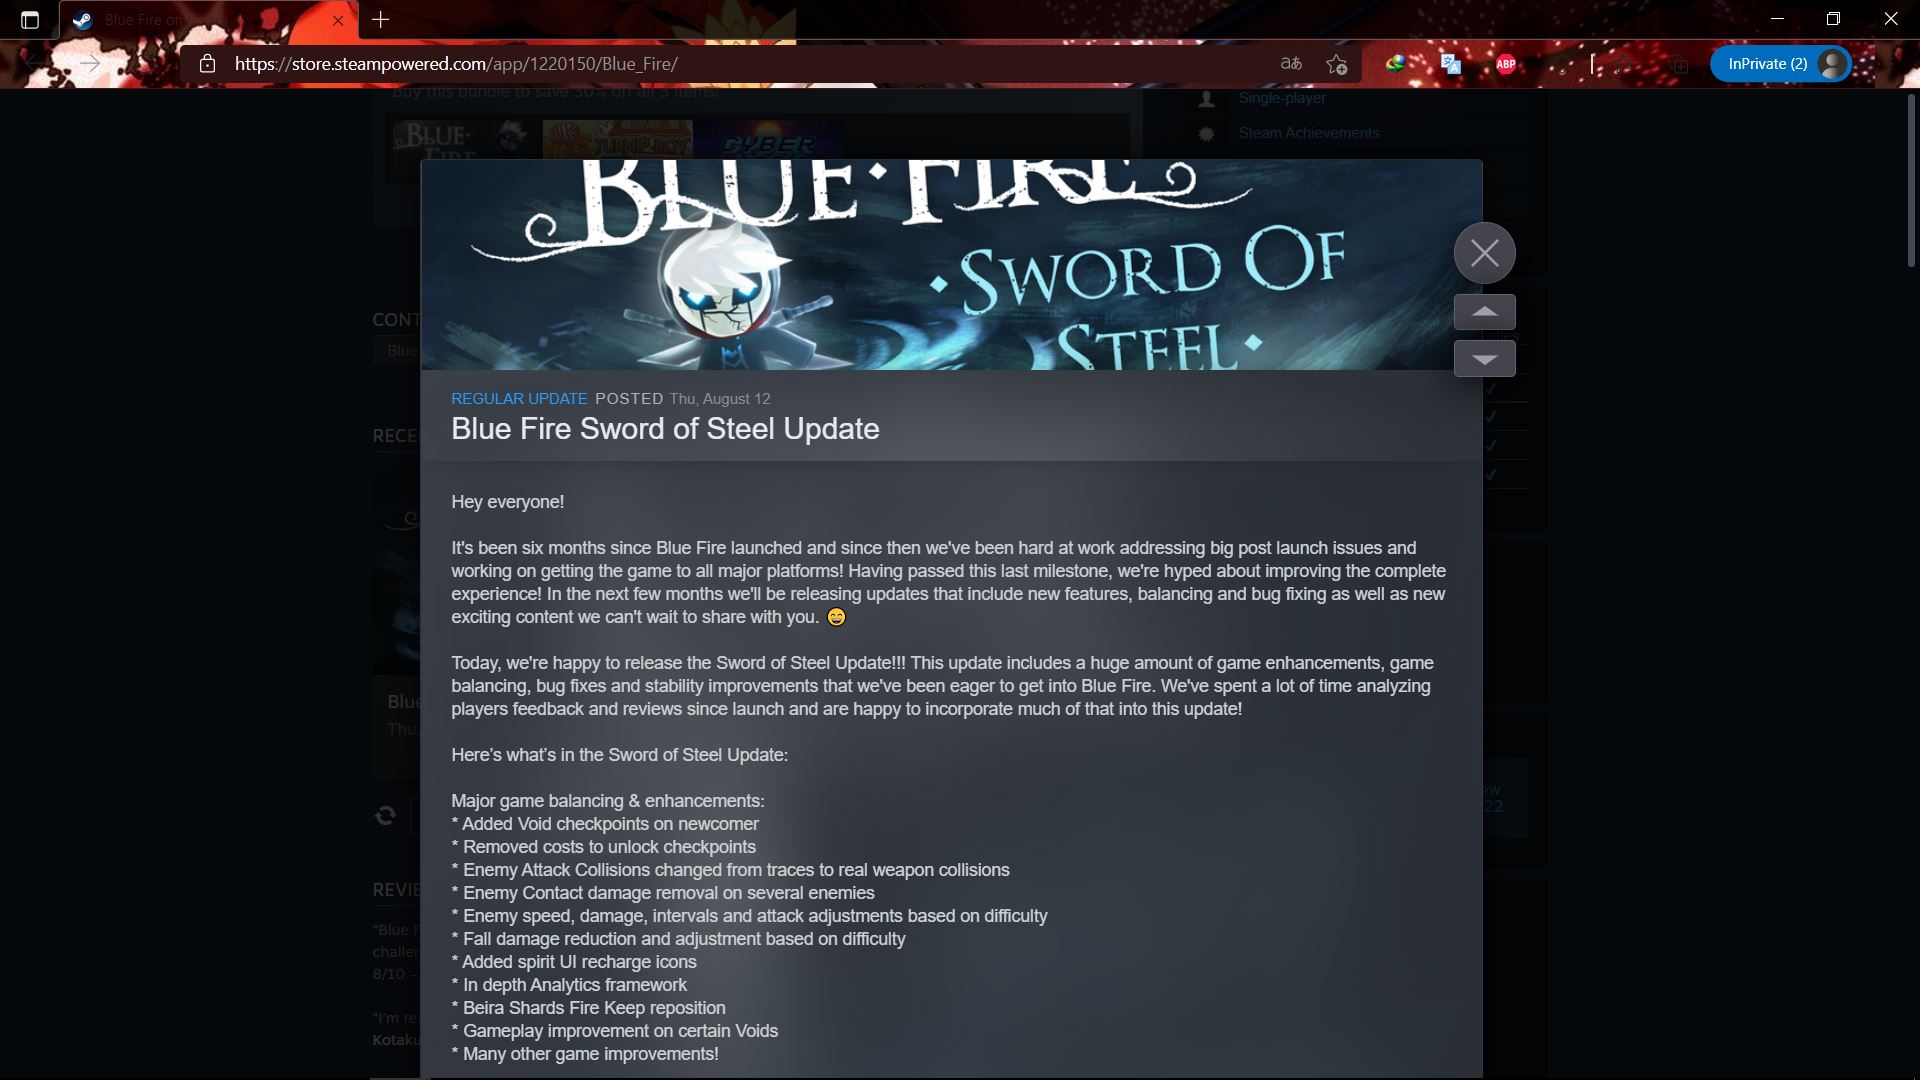 [REQUEST UPDATE] Blue Fire Sword of Steel Update